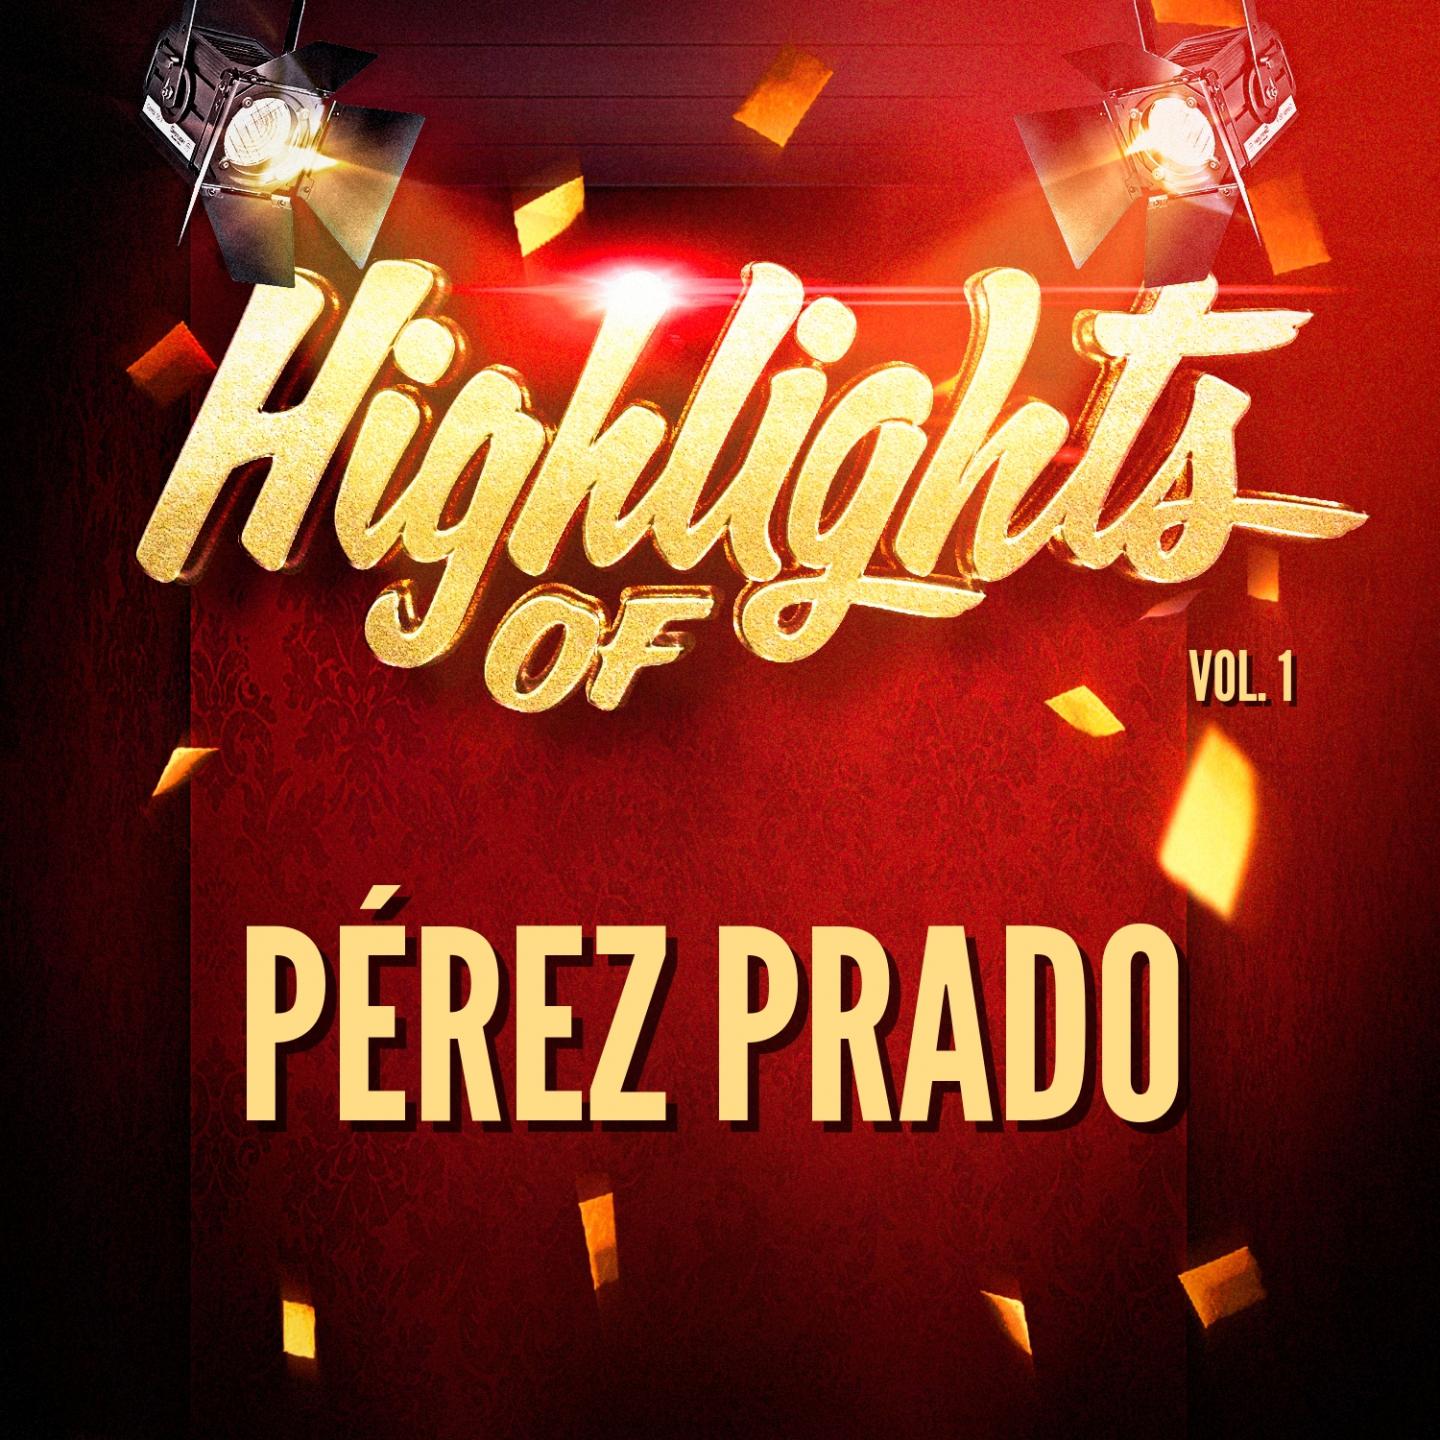 Highlights of Pe rez Prado, Vol. 1